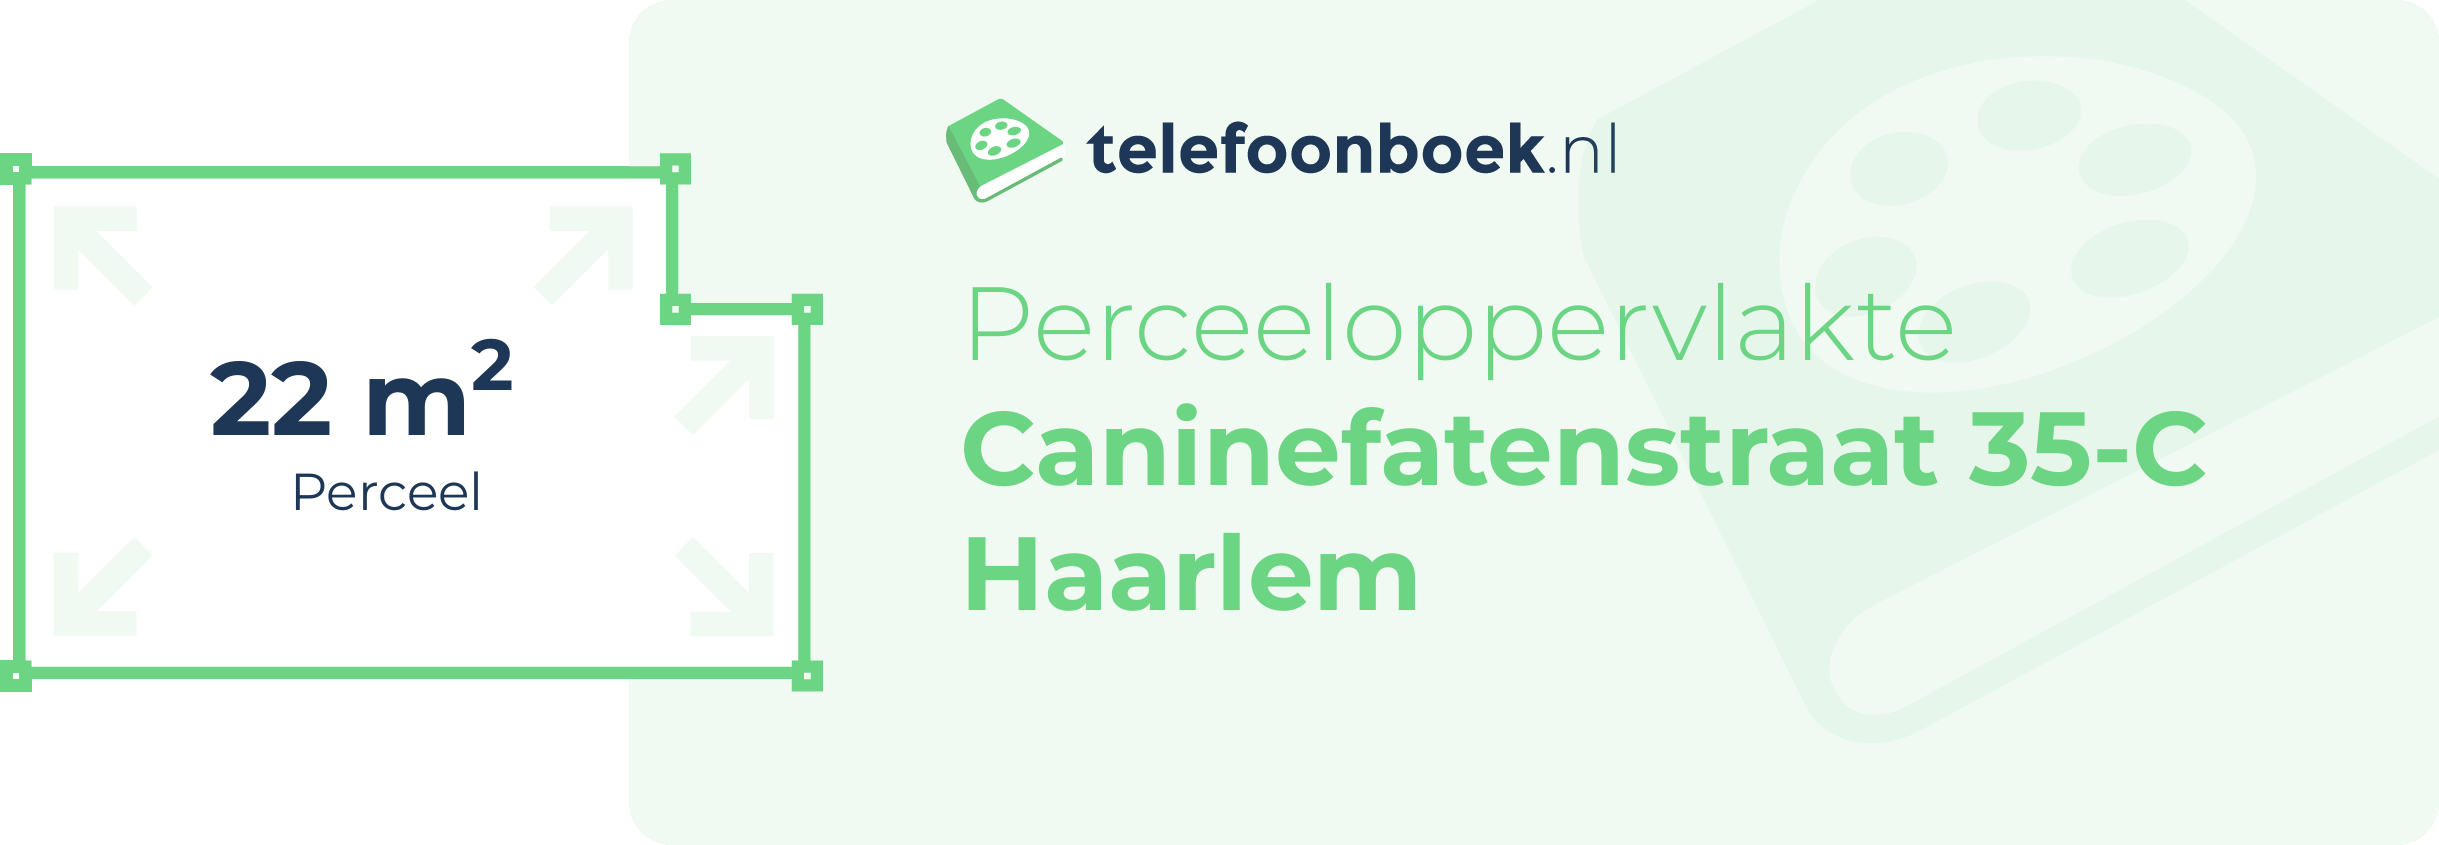 Perceeloppervlakte Caninefatenstraat 35-C Haarlem